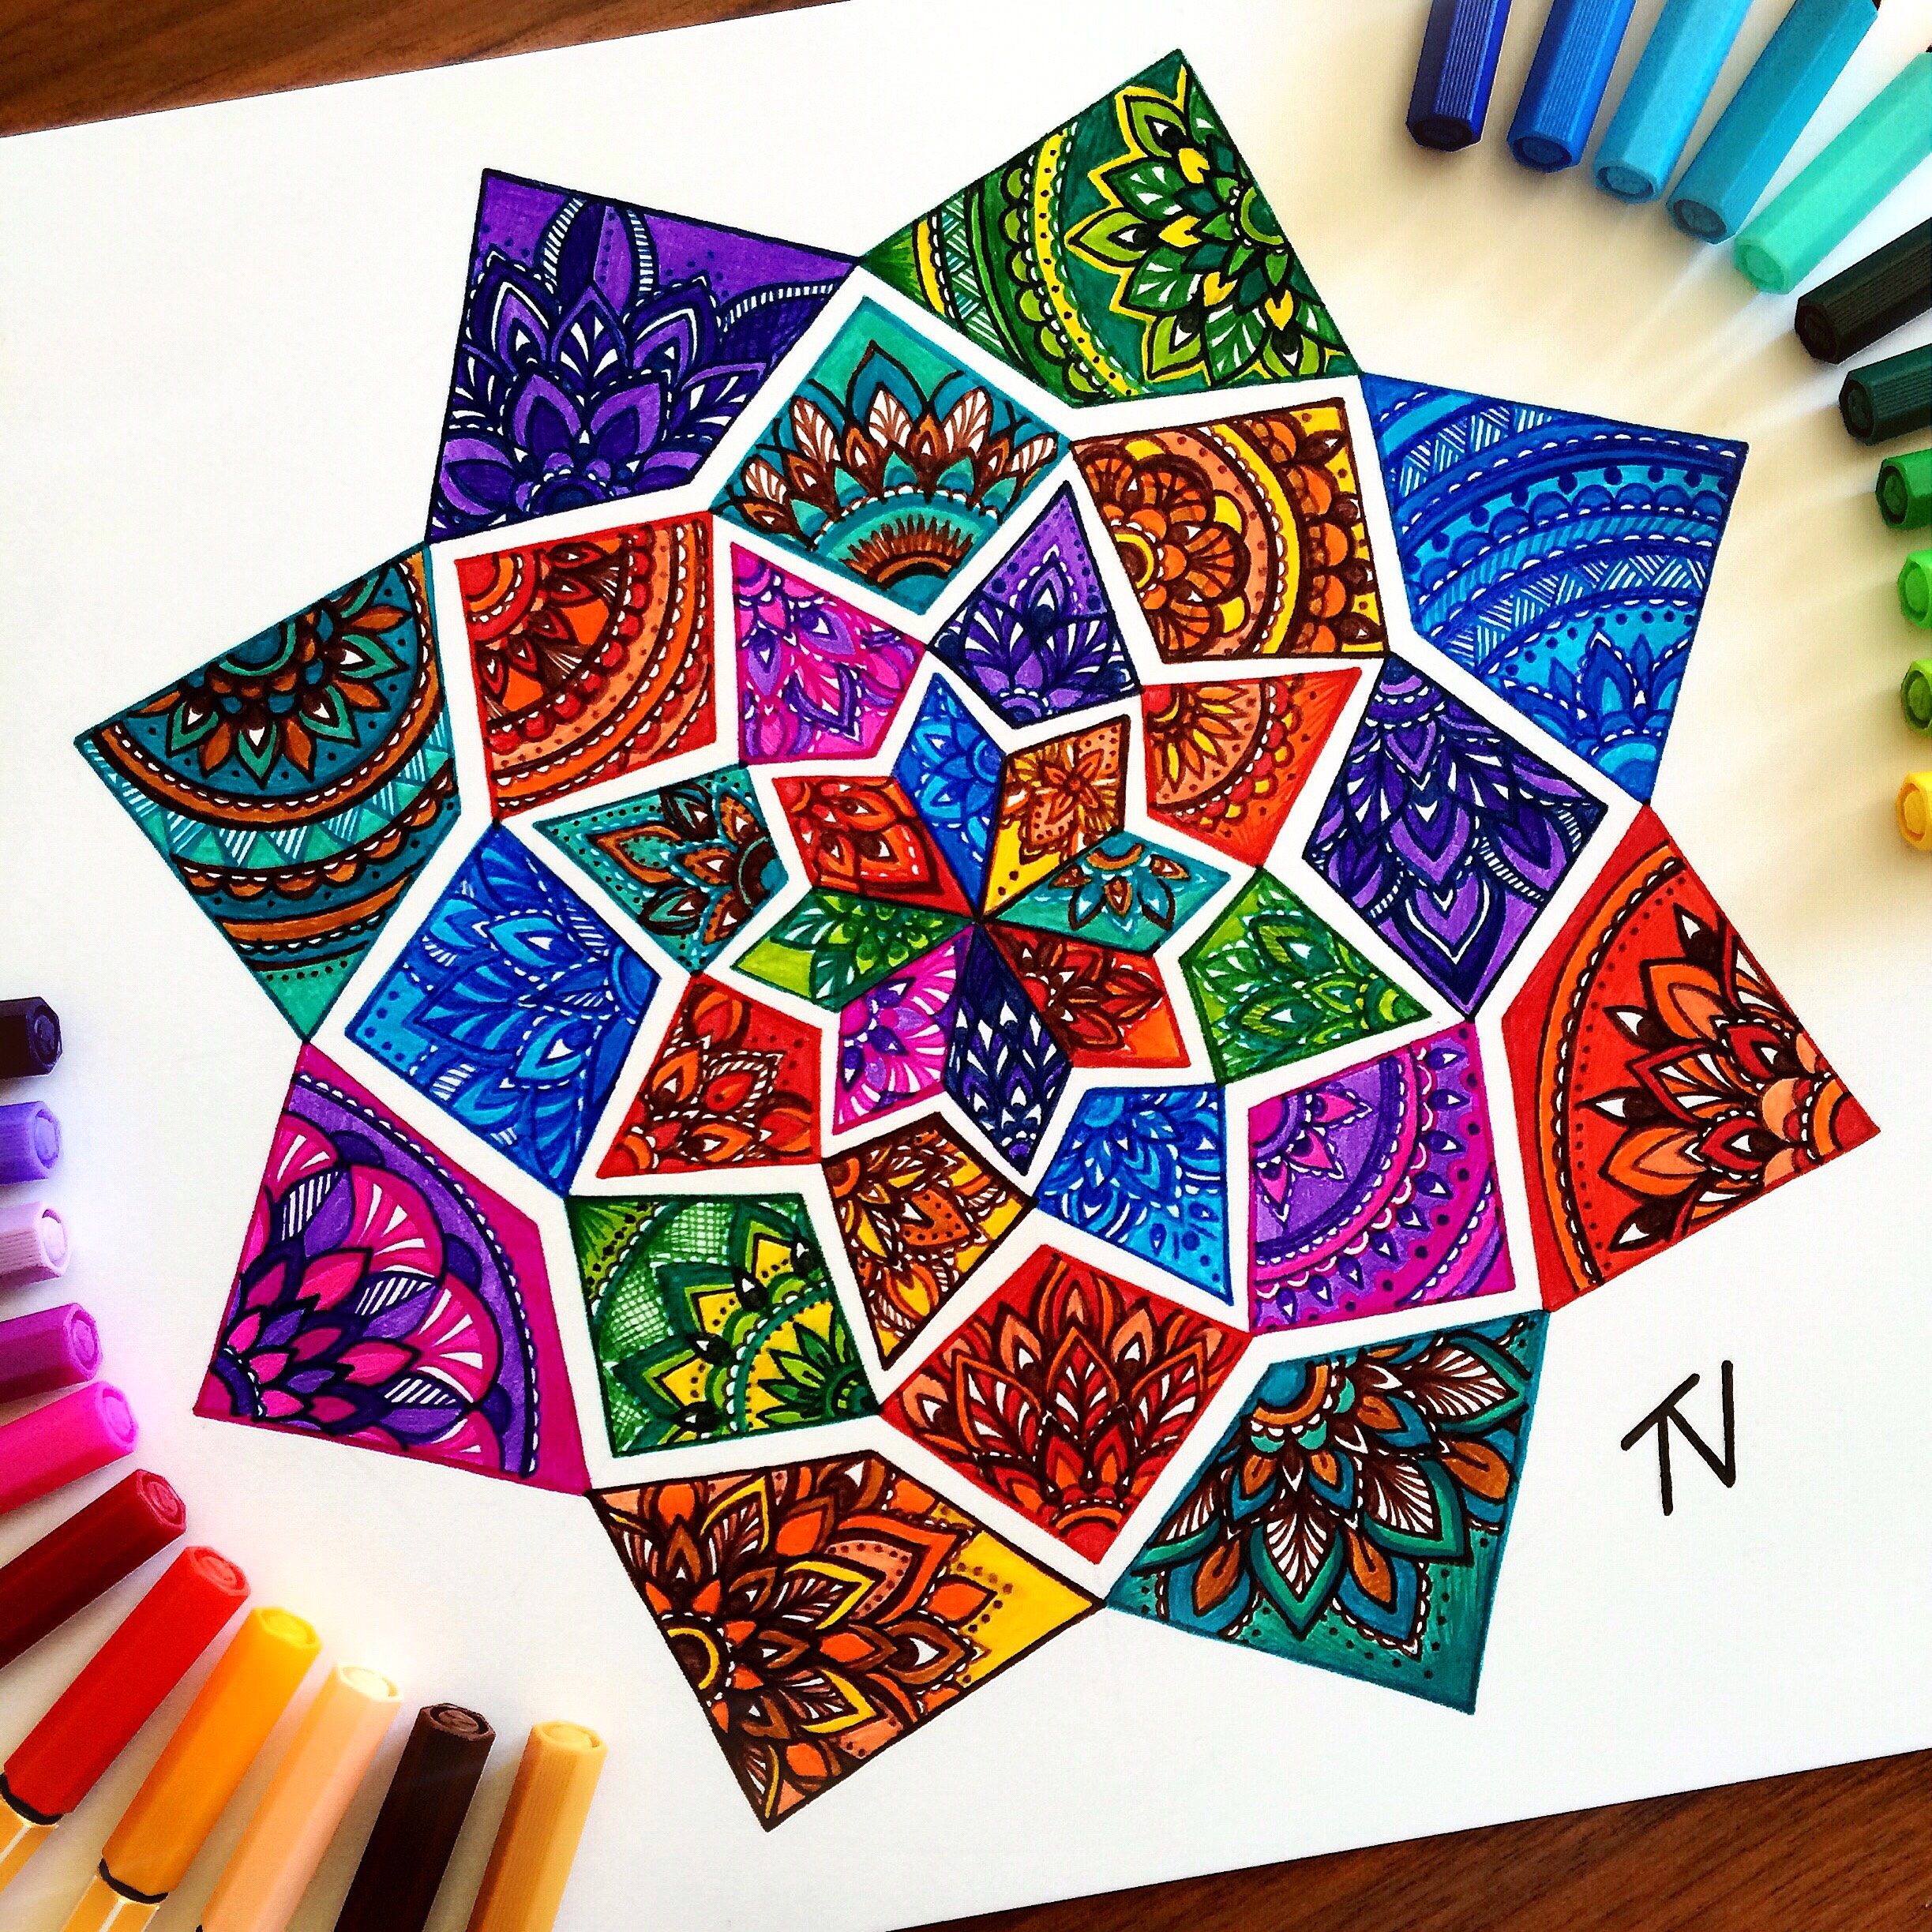 The vibrant art of mandalas by Nigar Tahmazova